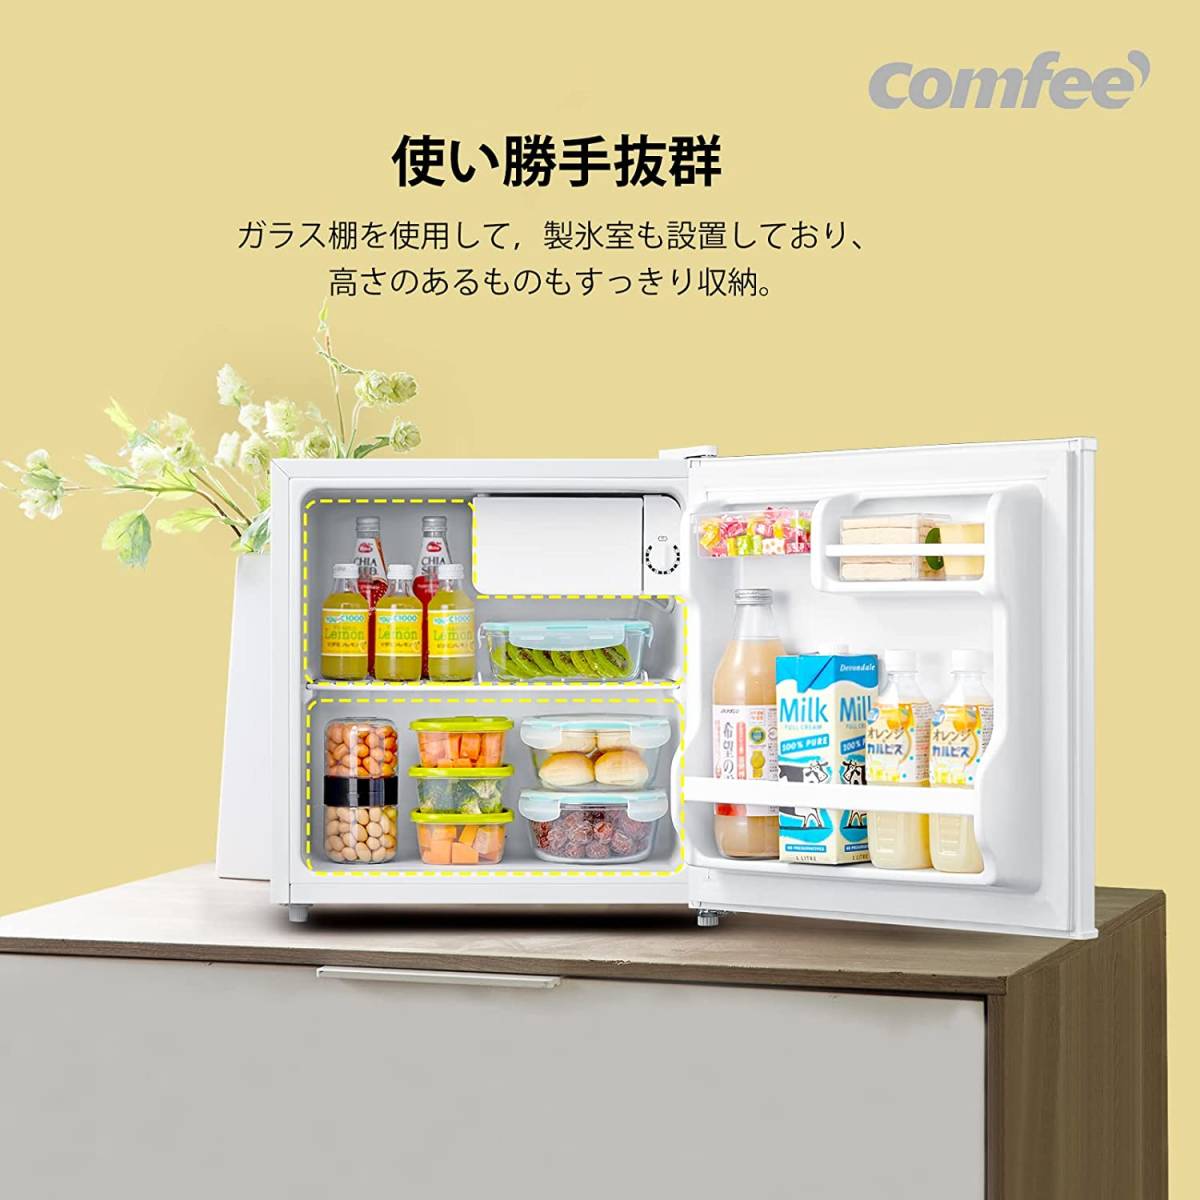 COMFEE' 冷蔵庫 小型 一人暮らし 45L 幅47cm 右開き コンパクト 静音 省エネ ミニ冷蔵庫 ホワイト RCD45WH/E_画像9